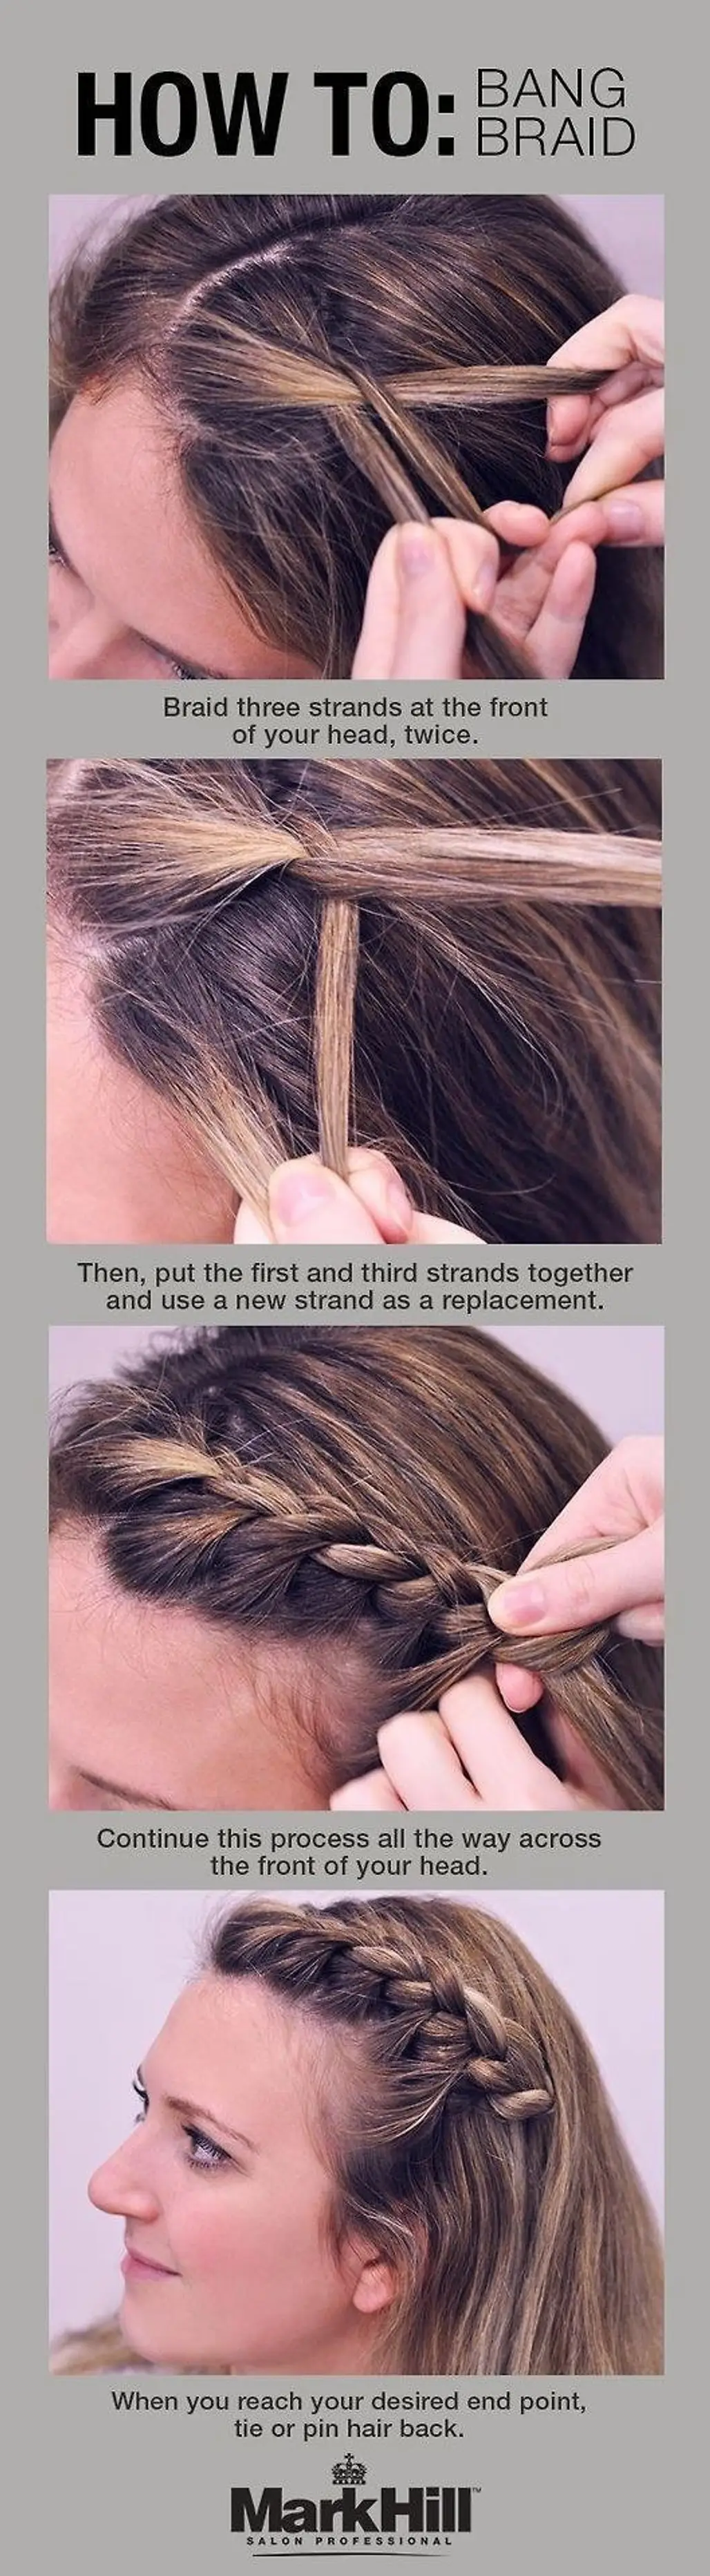 How to Braid the BIG Braid